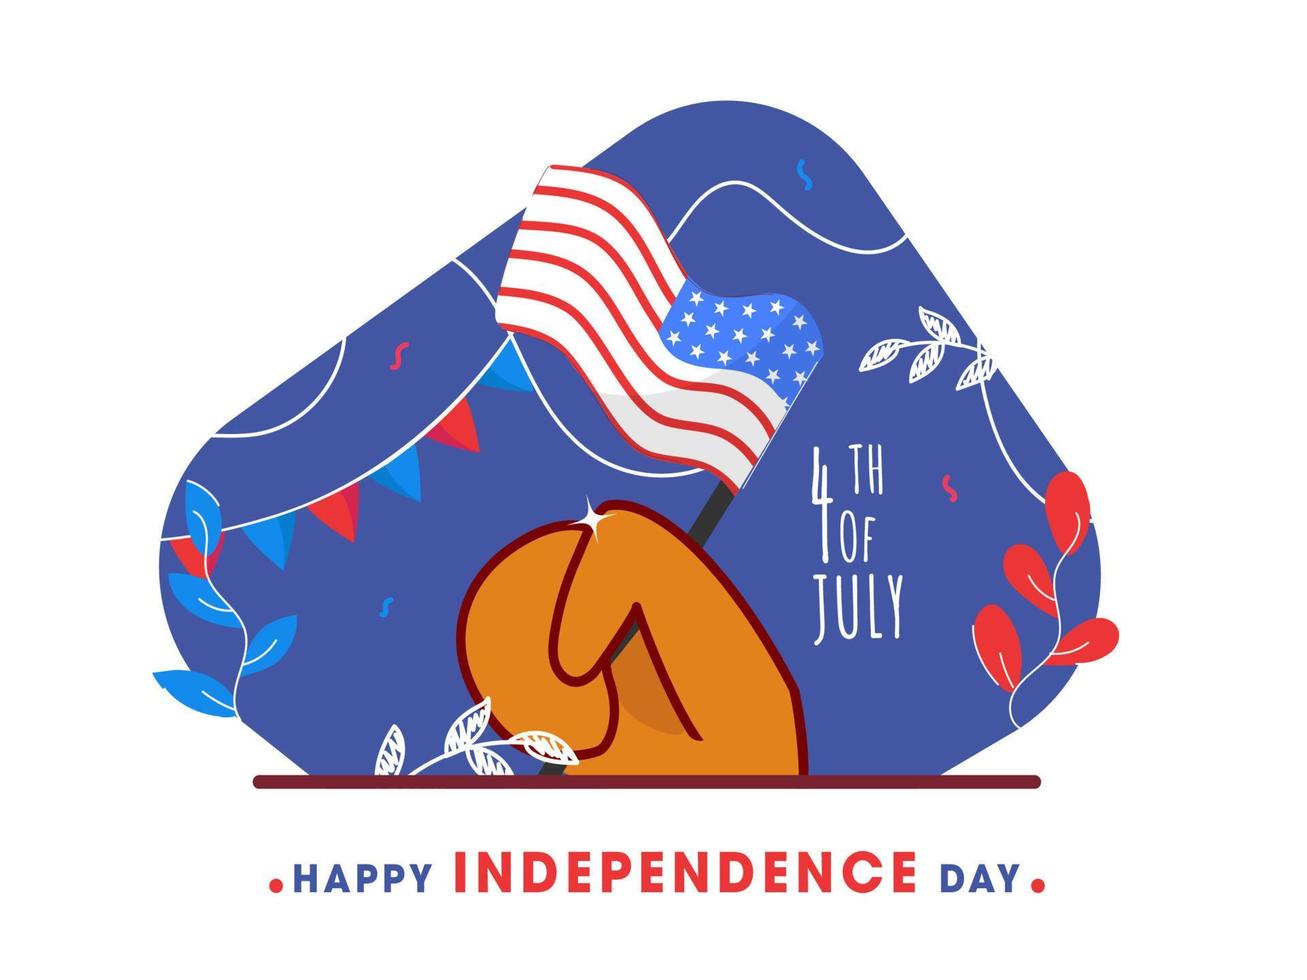 4to de julio texto con humano mano participación Estados Unidos bandera en resumen antecedentes para contento independencia día concepto. vector